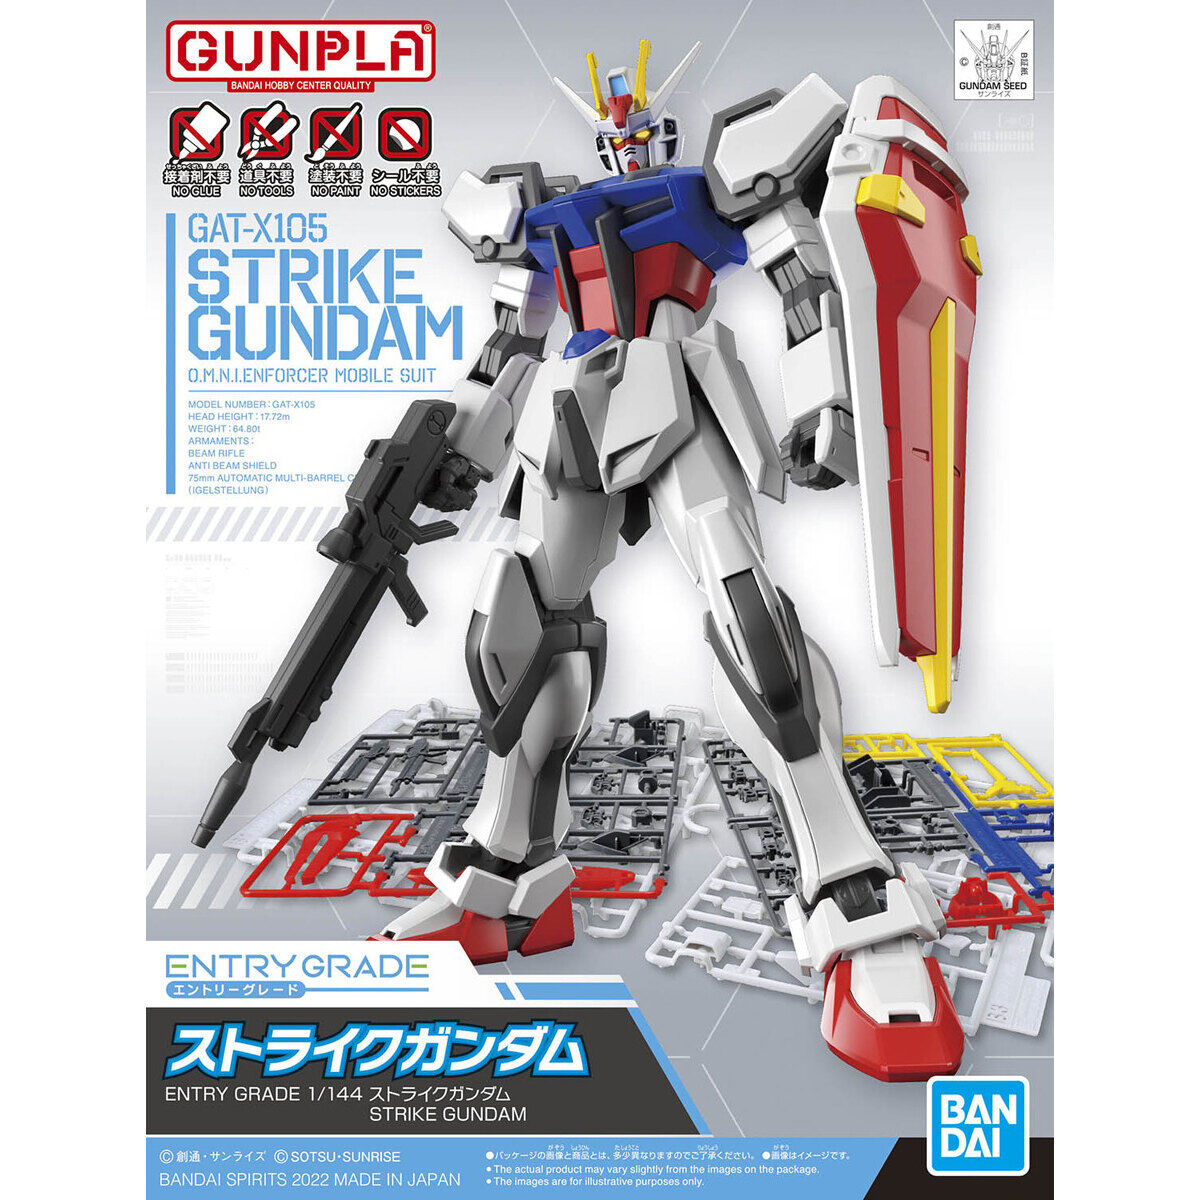 1/144 ENTRY GRADE Strike Gundam